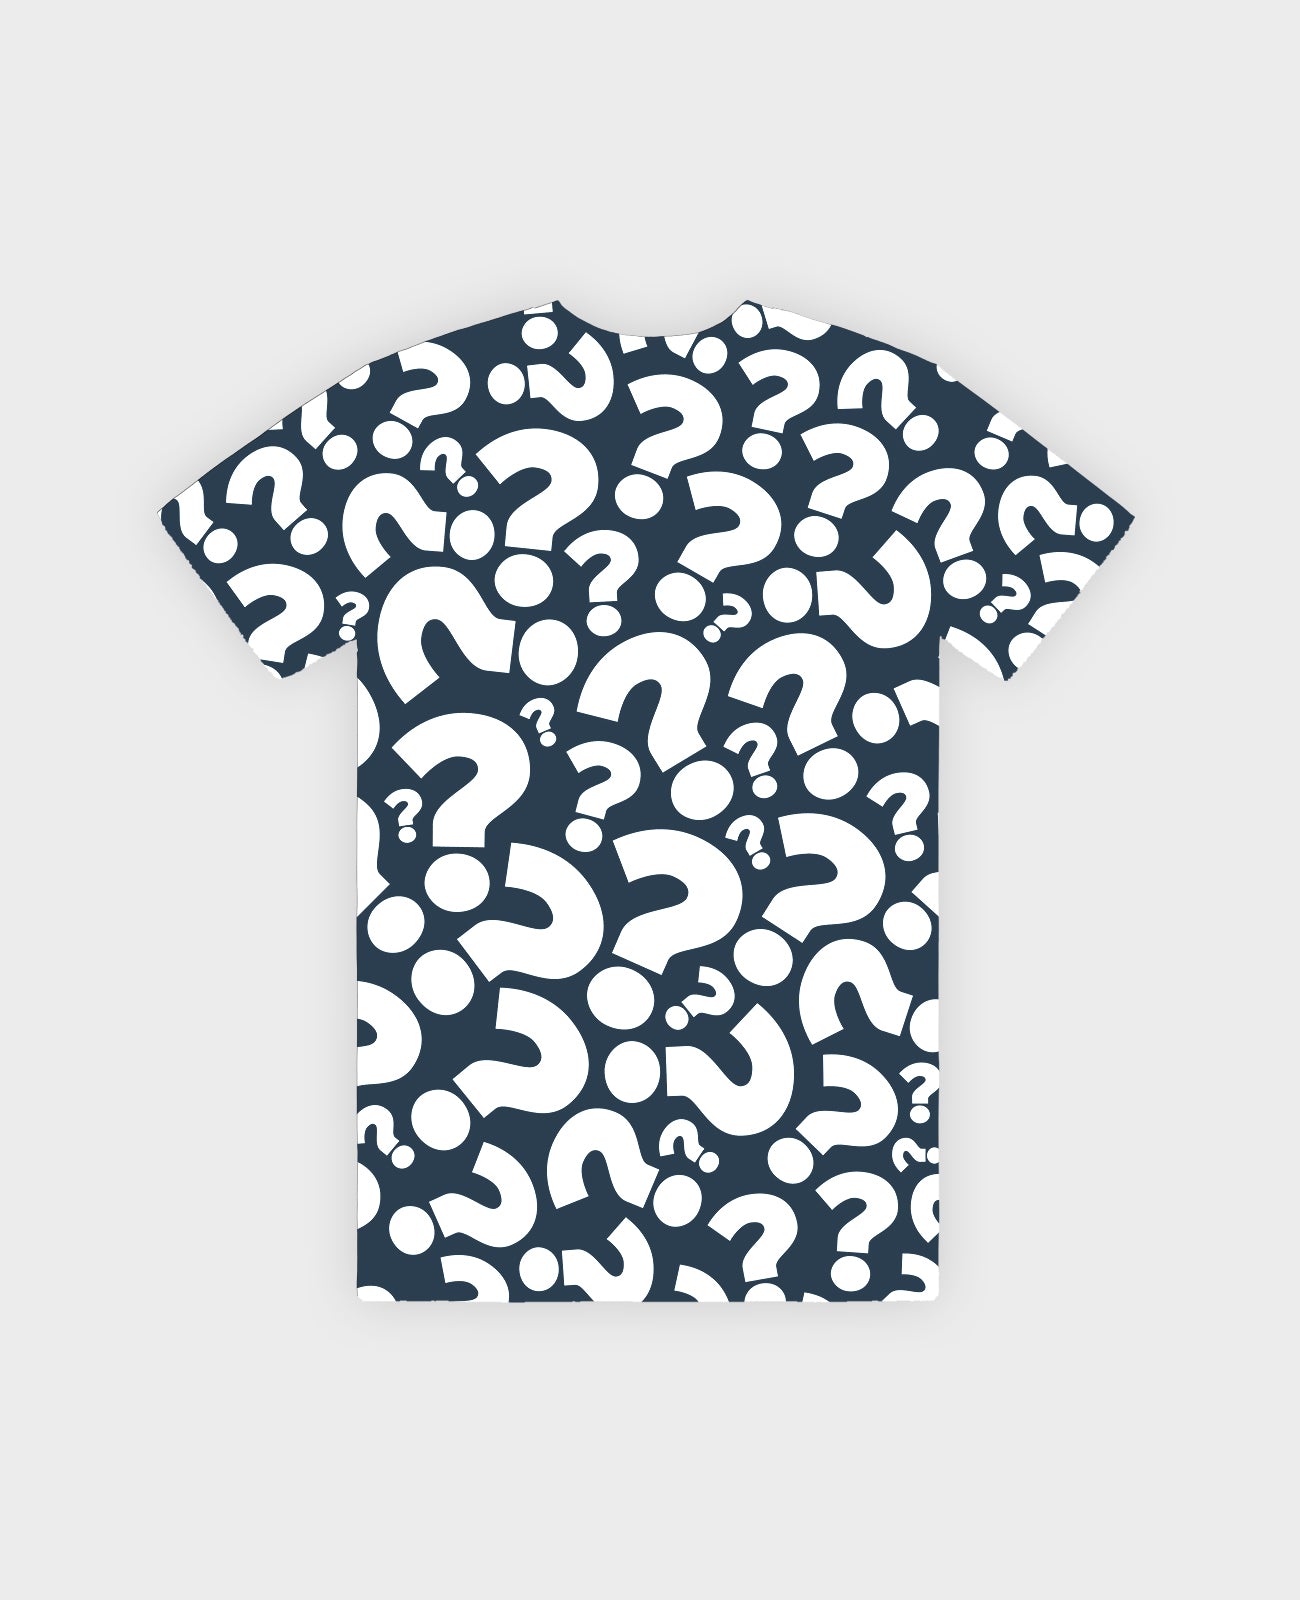 Men's Mystery T-Shirt